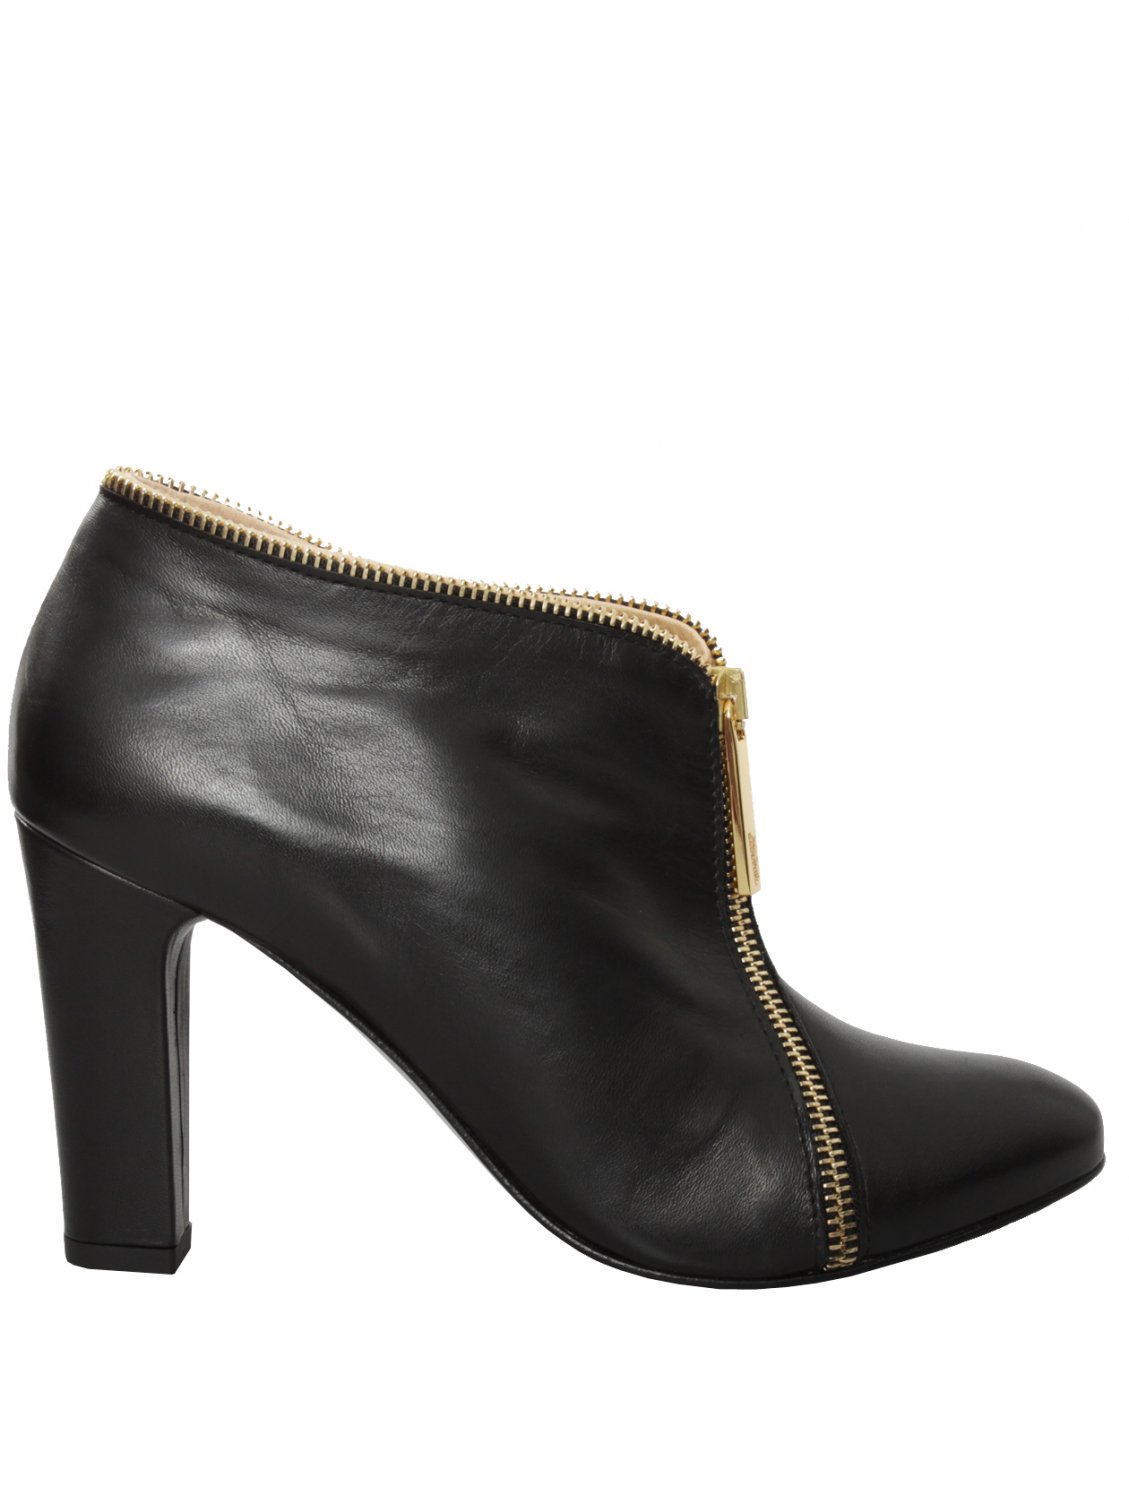 Jean Paul Gaultier Isabelle Heeled Boots Black in Black | Lyst